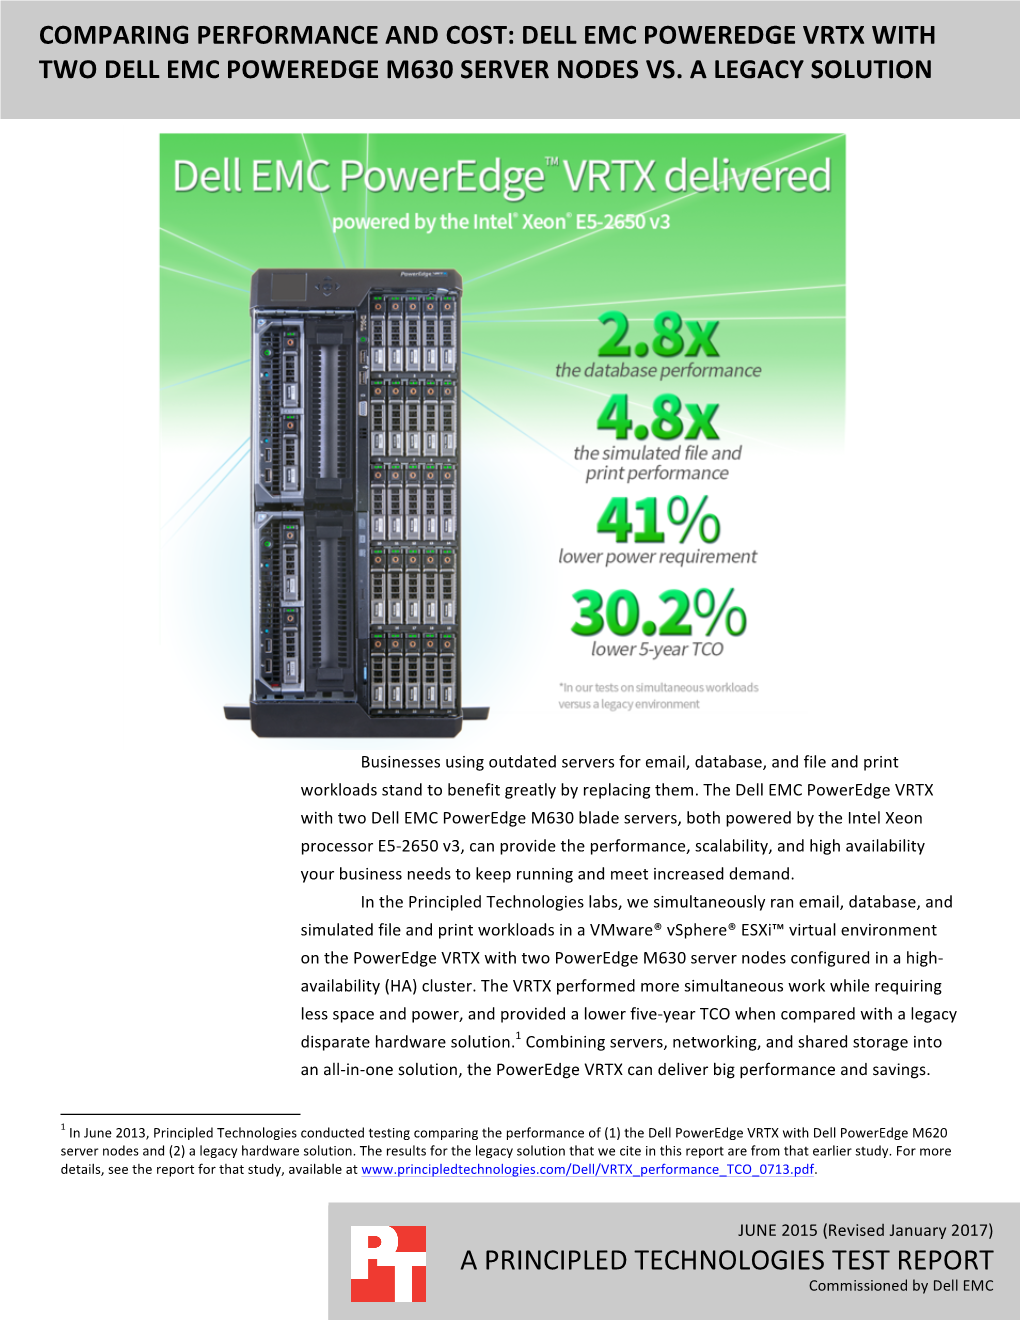 Dell Emc Poweredge Vrtx with Two Dell Emc Poweredge M630 Server Nodes Vs